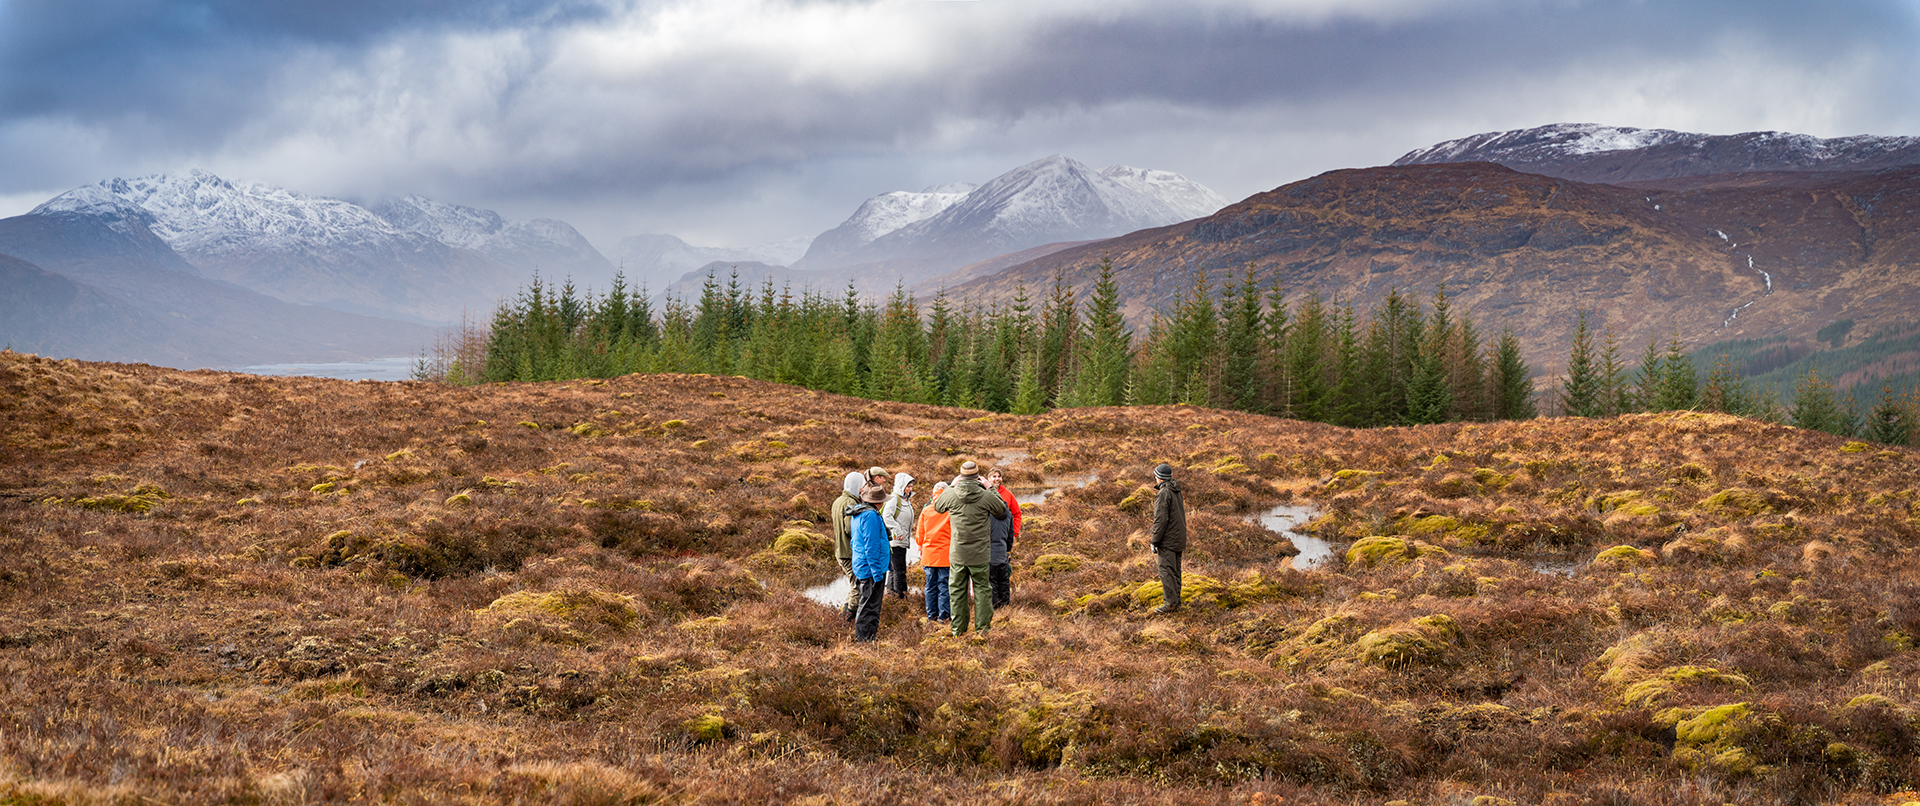 People standing in a peat bog